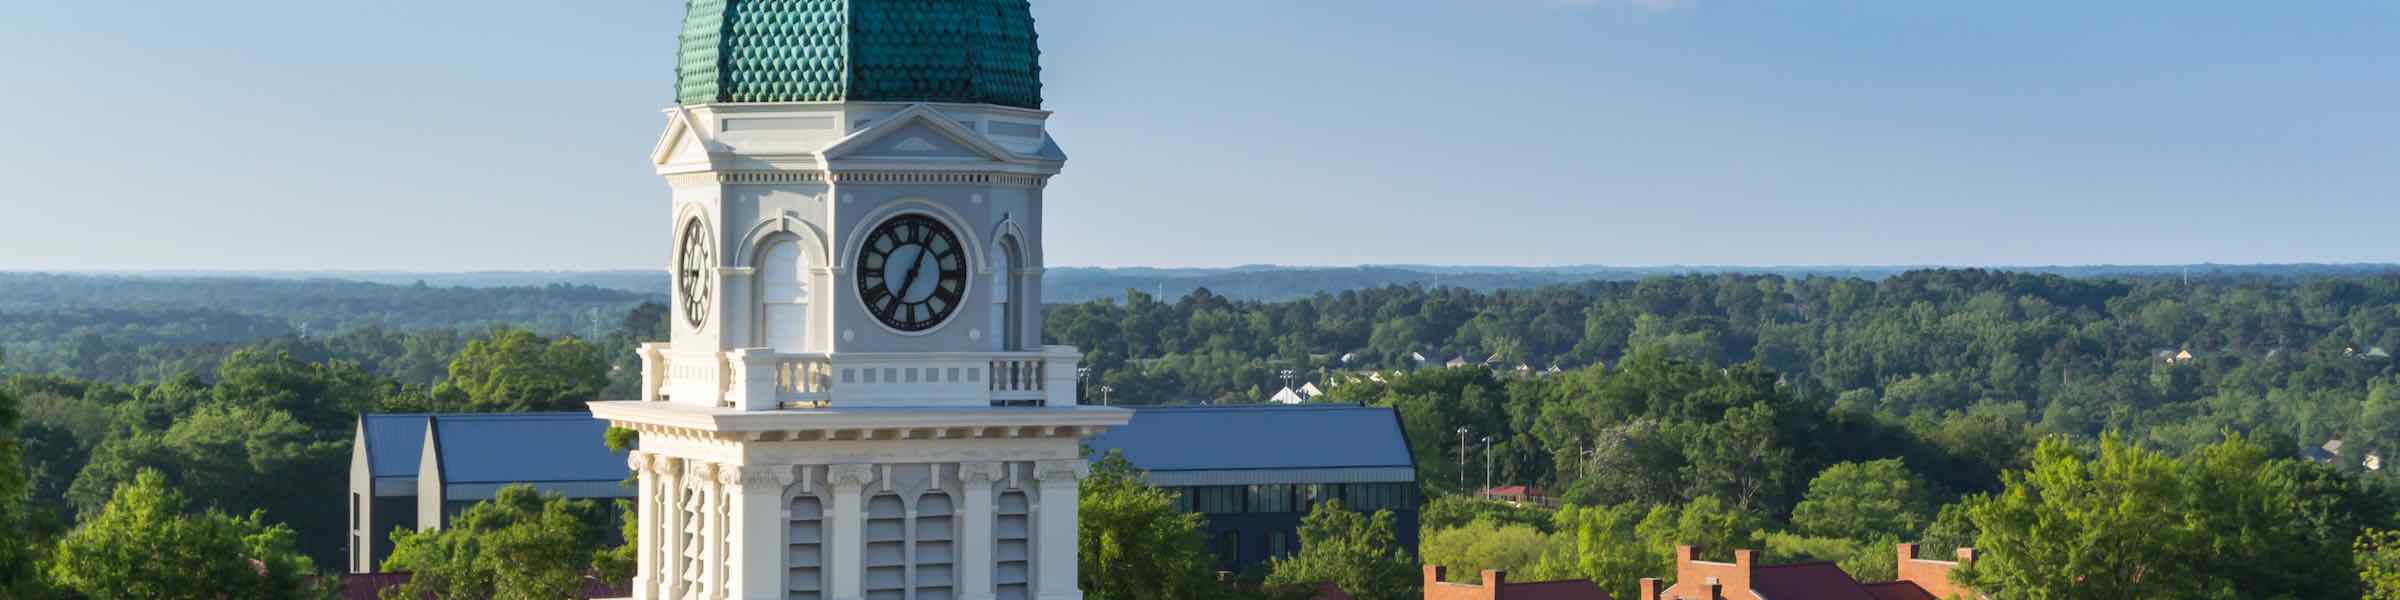 Clock tower overlooking downtown Athens, GA.